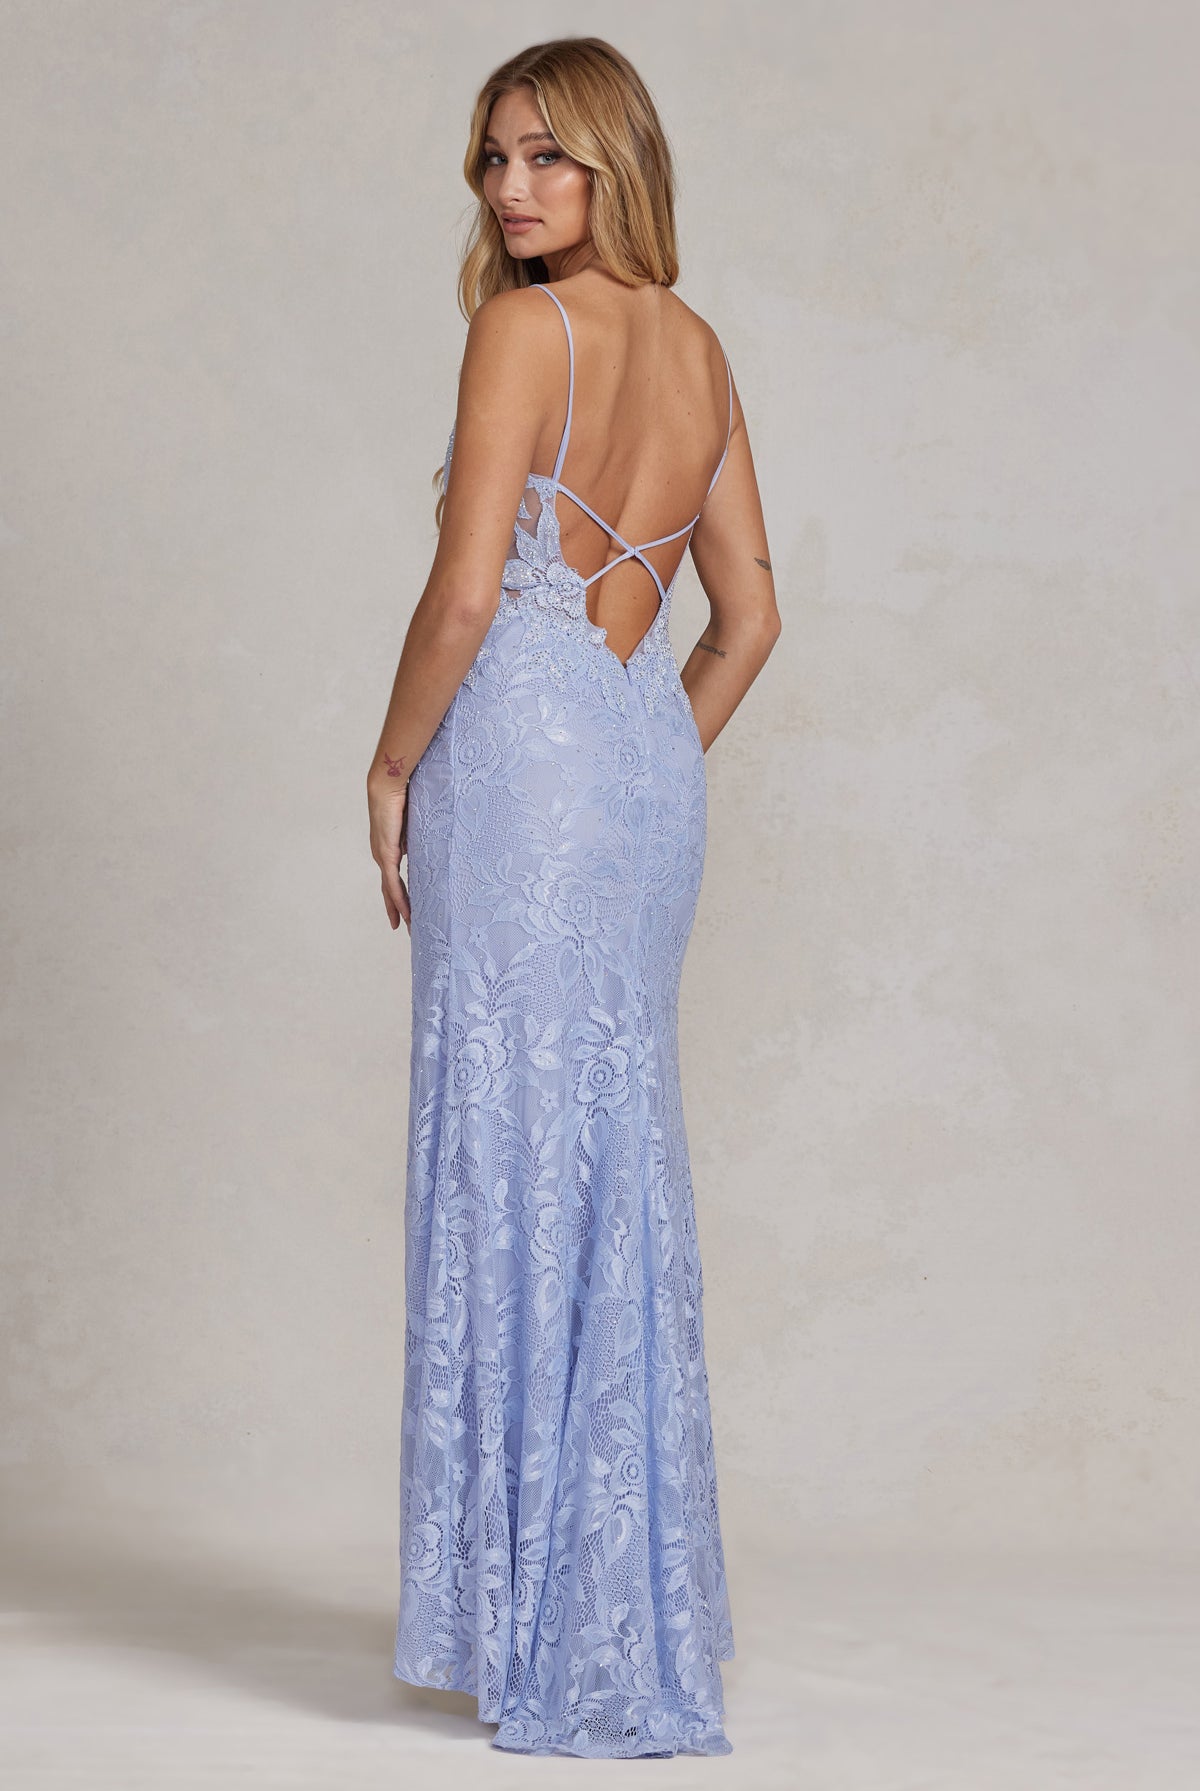 Side Slit Embroidered Lace Embellished Glitter Long Prom Dress NXG1148-Evening Dress-smcfashion.com